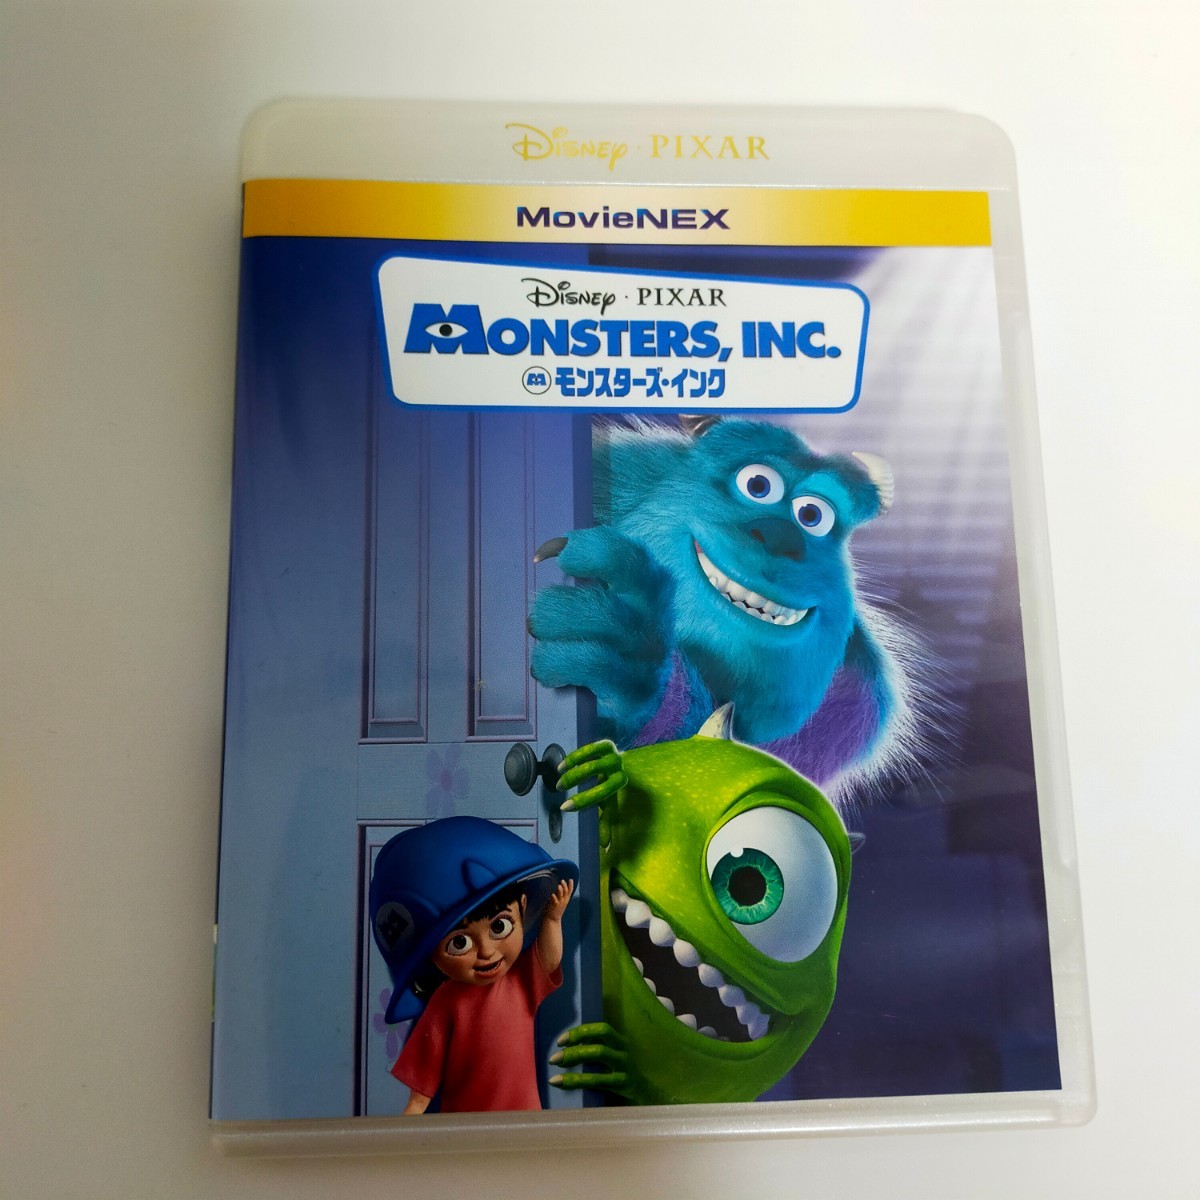 Disney PIXAR Disney piksa-MovieNEX DVD Blu-ray Blue-ray 2 pieces set Magic code less original case attaching 